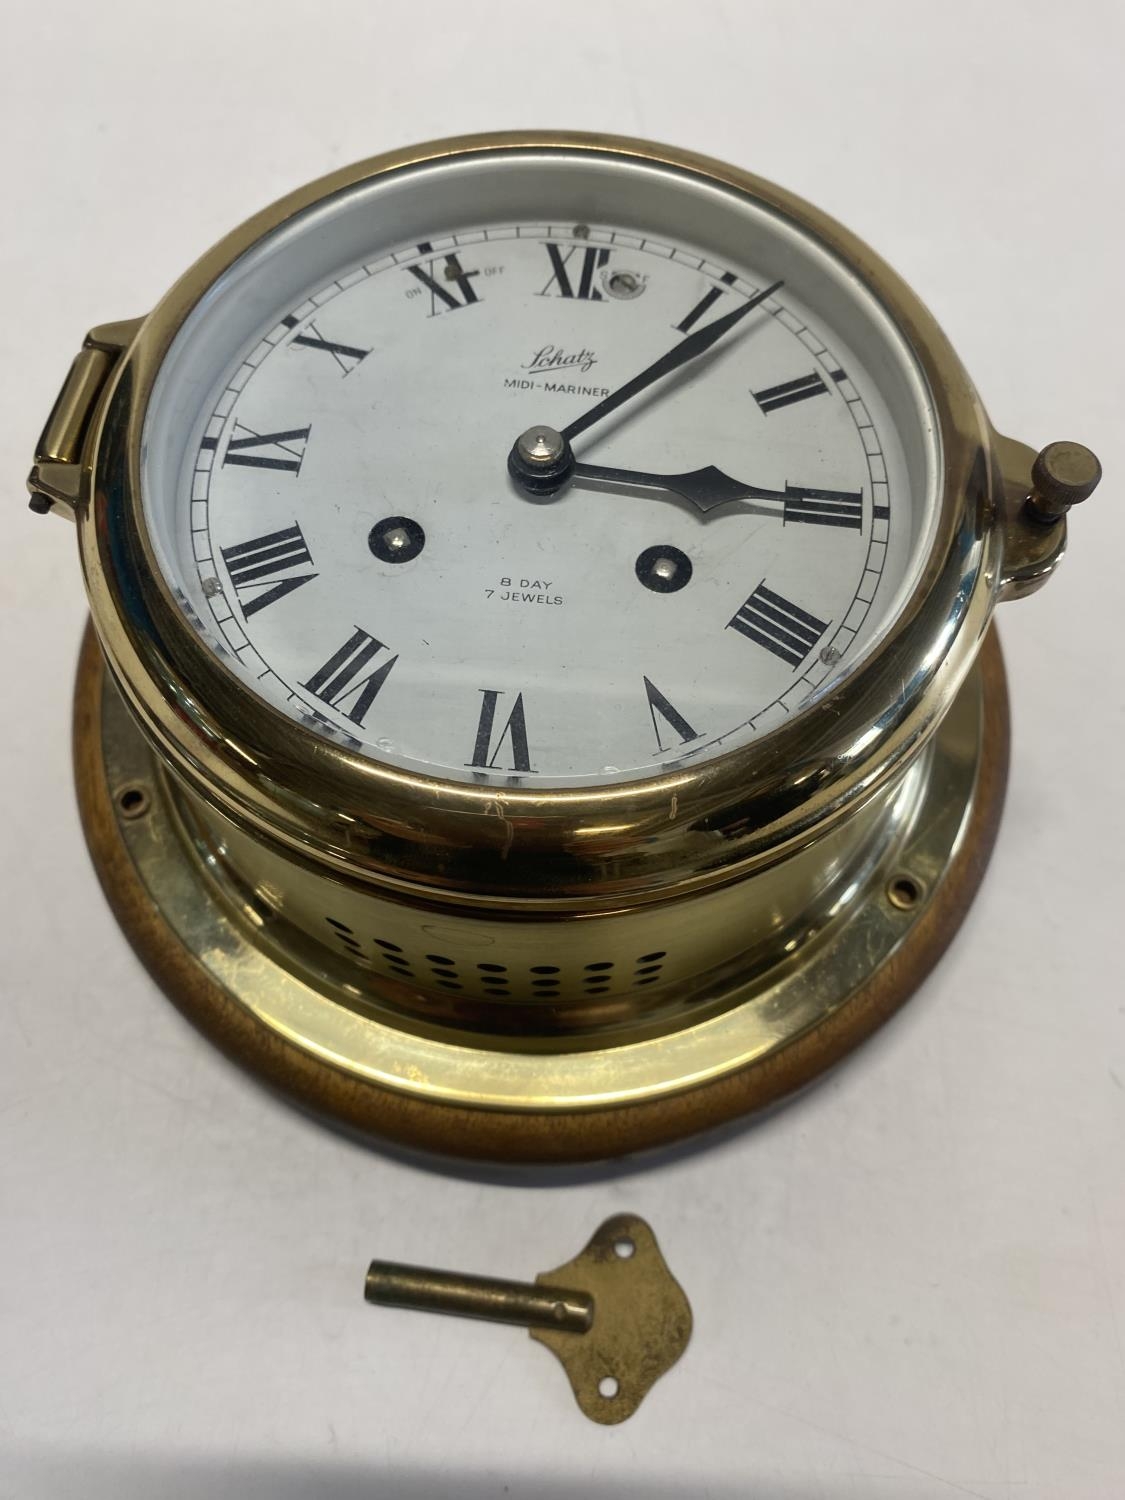 A Schatz ship clock midi-mariner clock with key